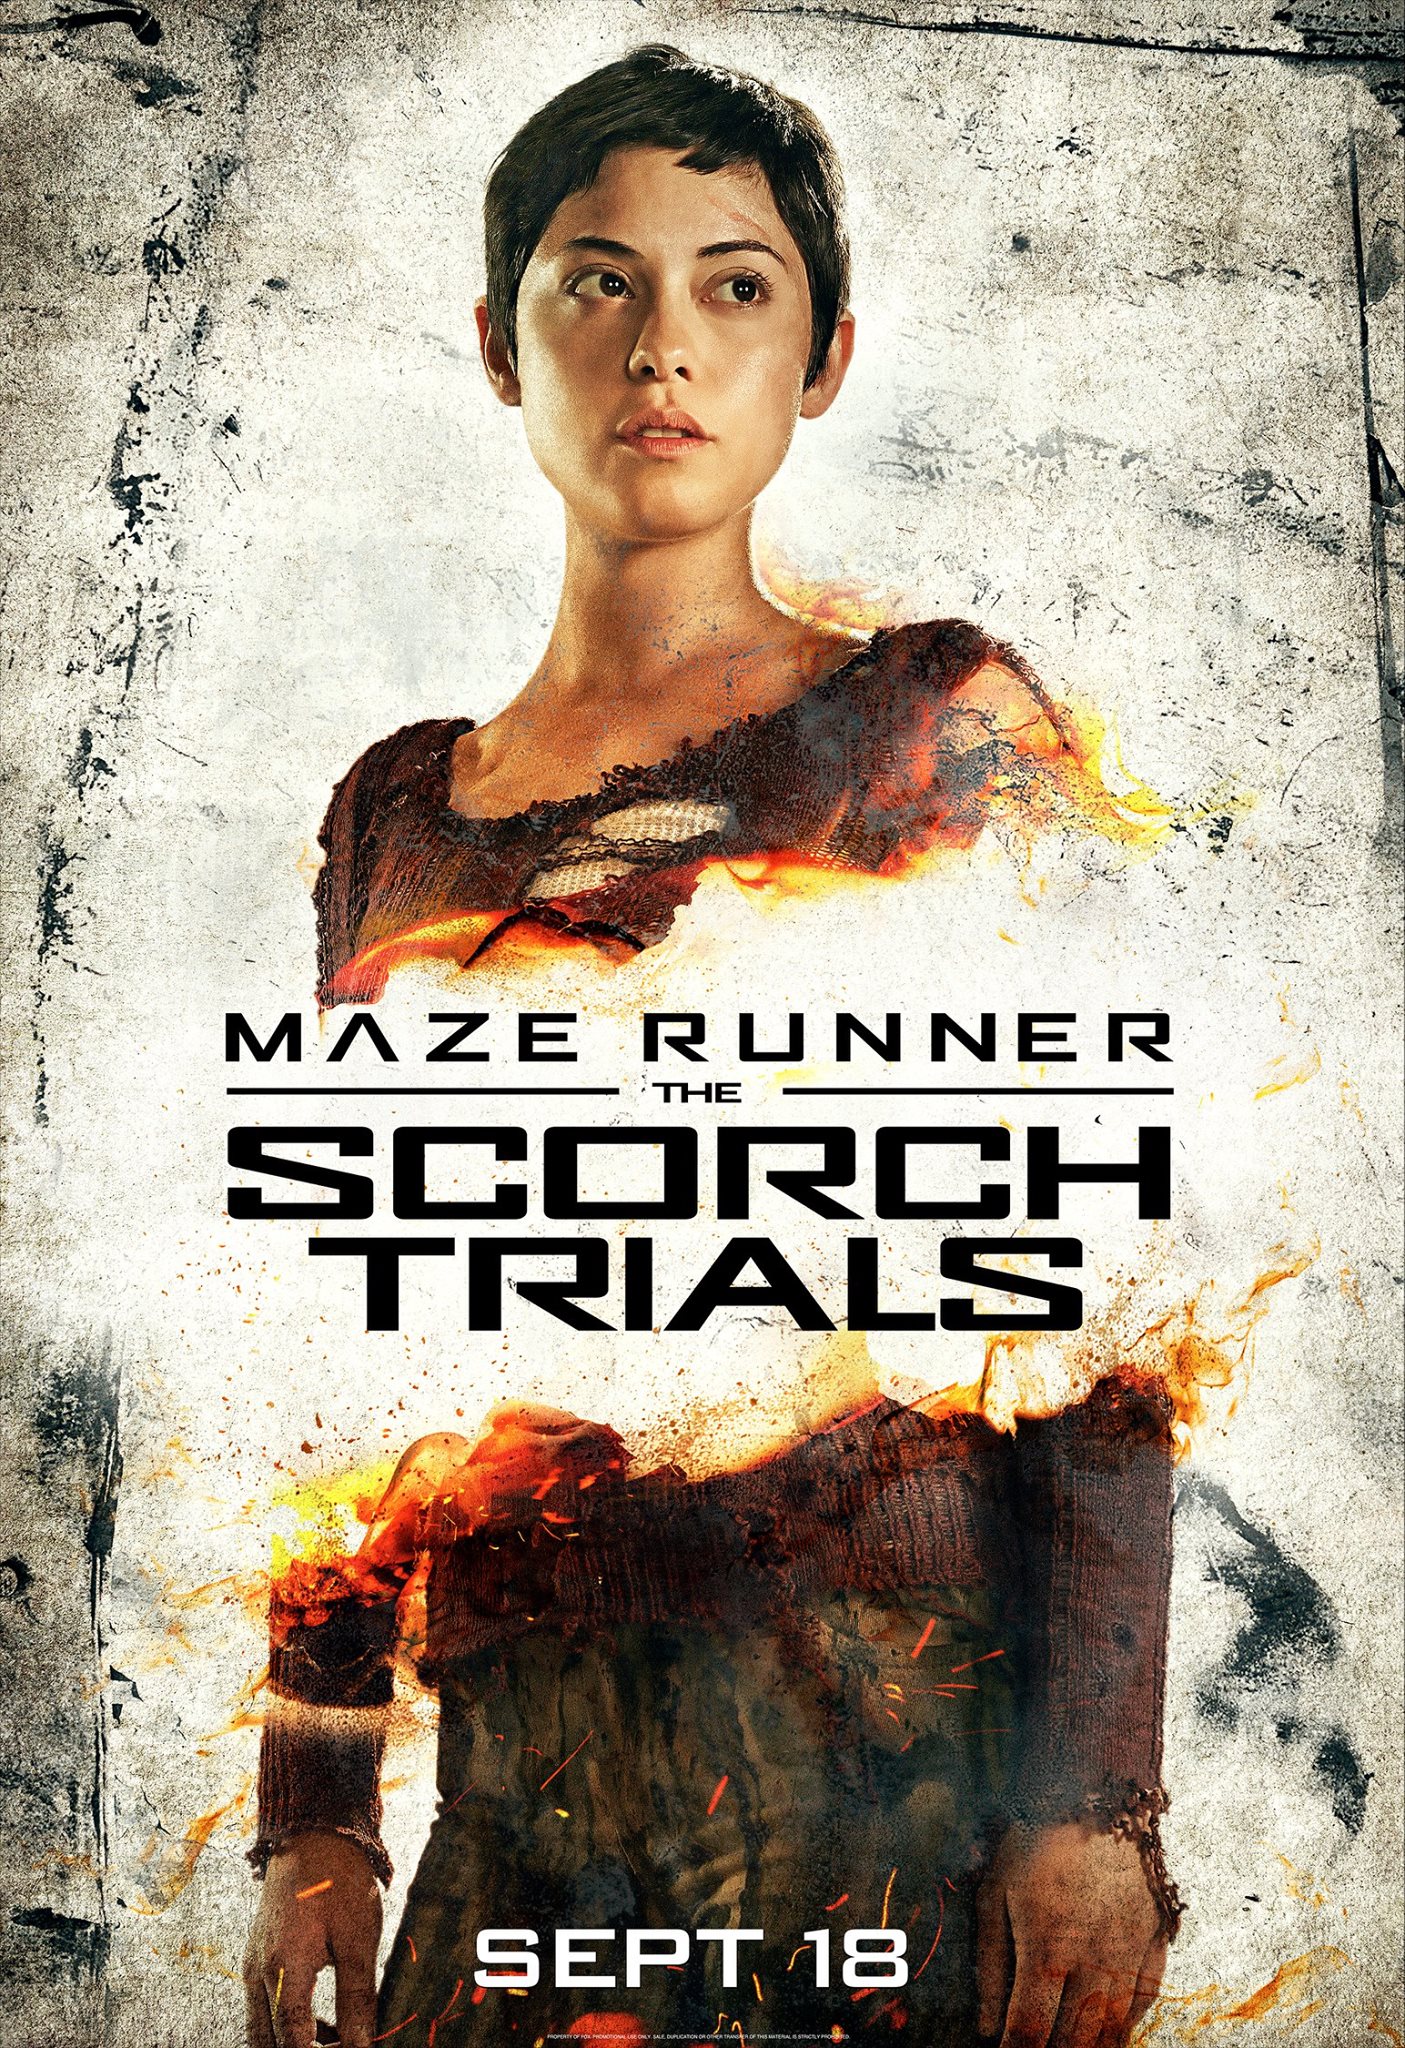 Rosa Salazar Maze Runner The Scorch Trials poster